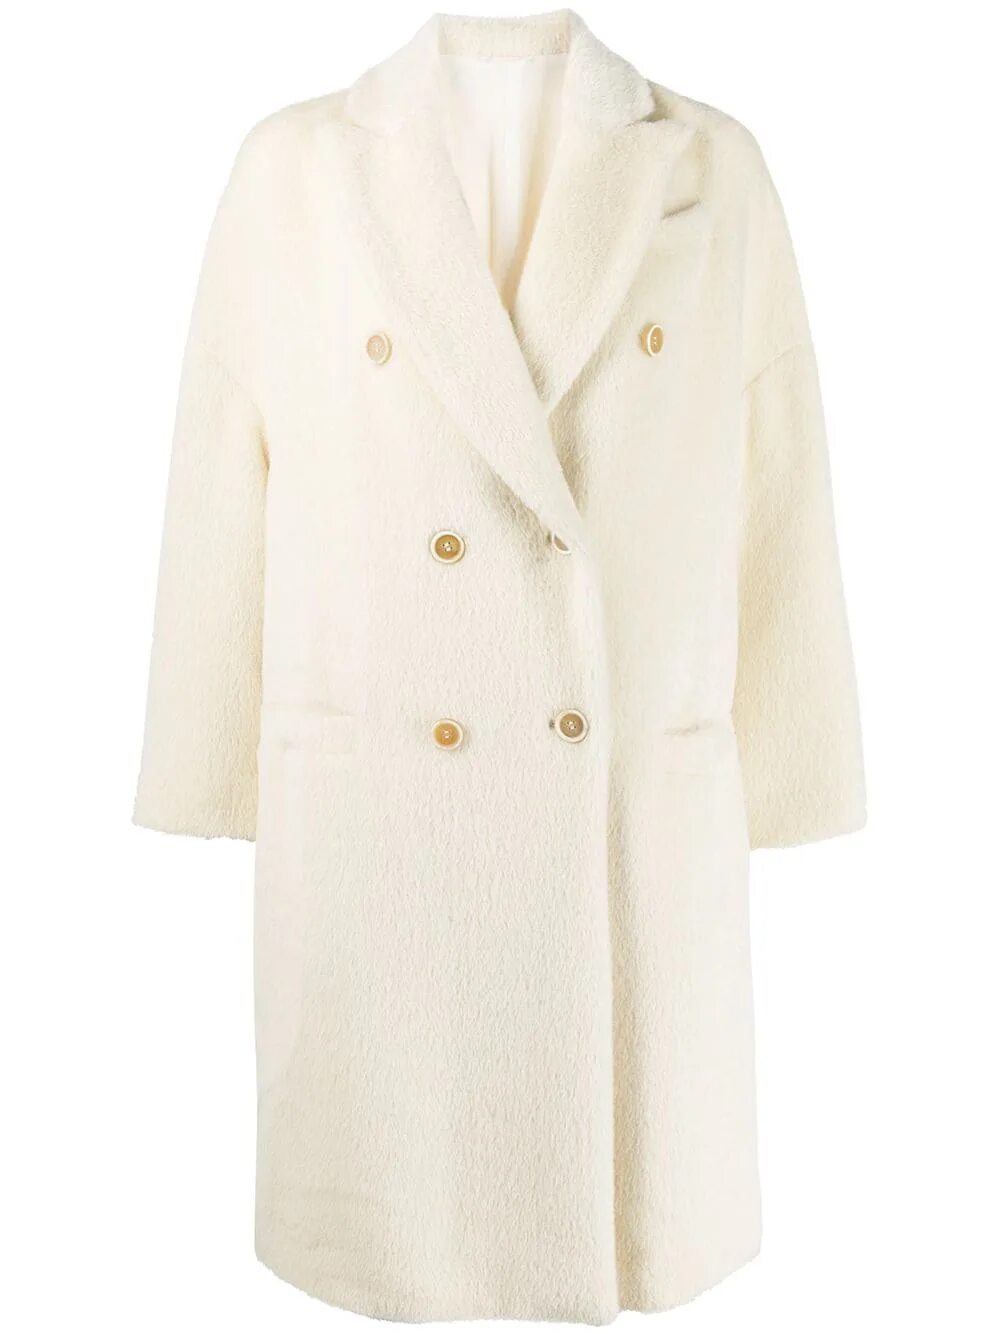 Mb5319574 Brunello Cucinelli пальто женское. Brunello Cucinelli пальто. Пальто Брунелло Кучинелли. Brunello Cucinelli пальто женское.